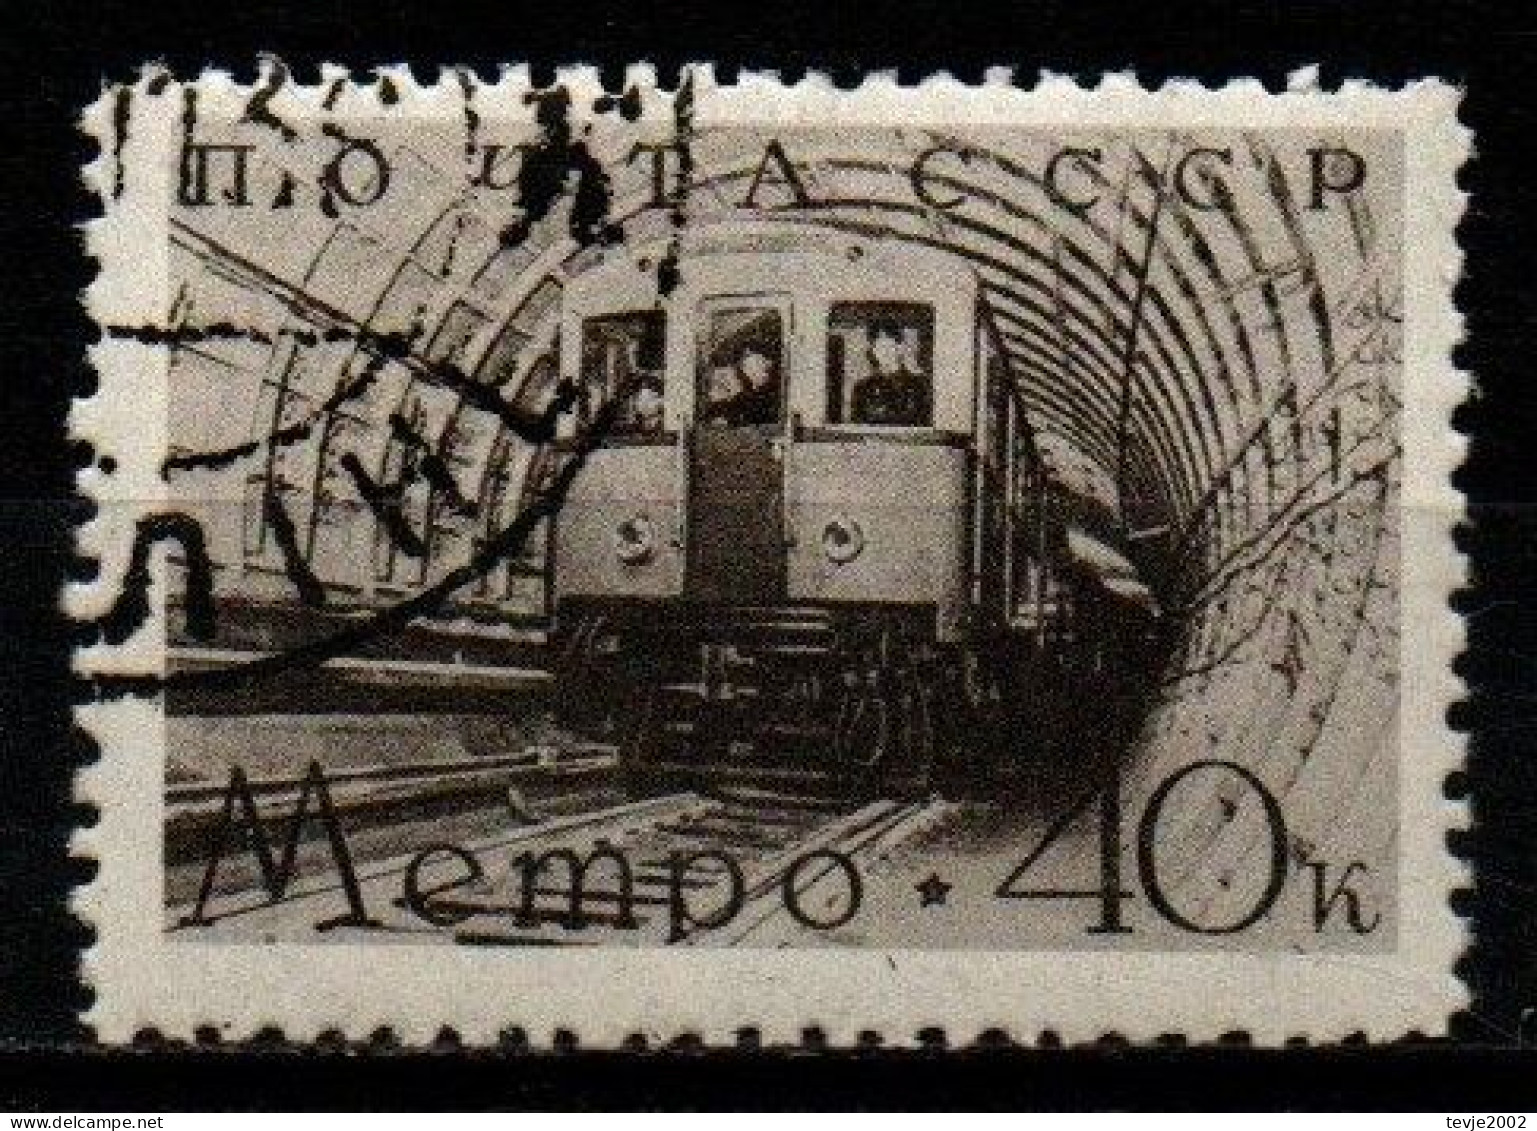 Sowjetunion UdSSR 1938 - Mi.Nr. 650 - Gestempelt Used - Eisenbahnen Railways - Gebraucht